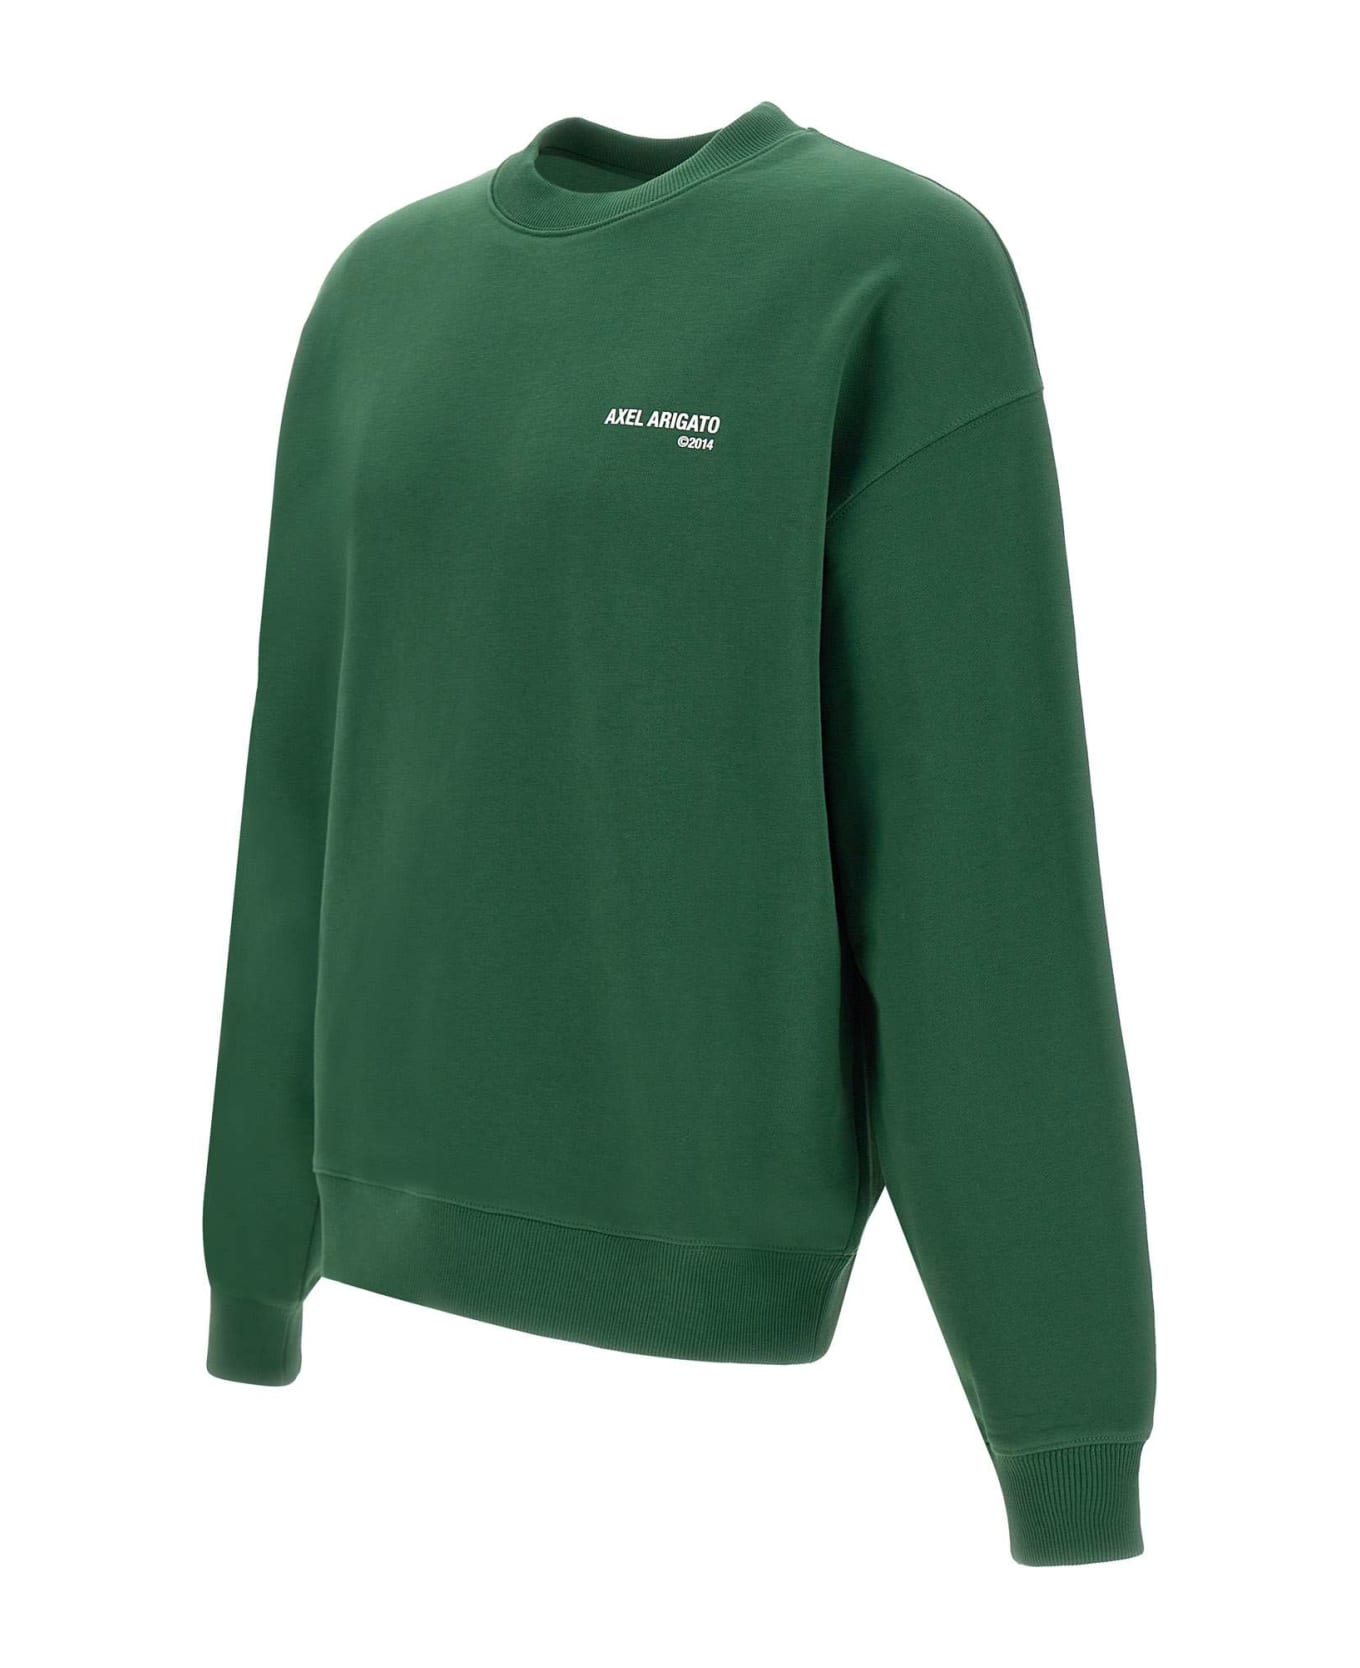 Axel Arigato "spade" Cotton Sweatshirt - GREEN